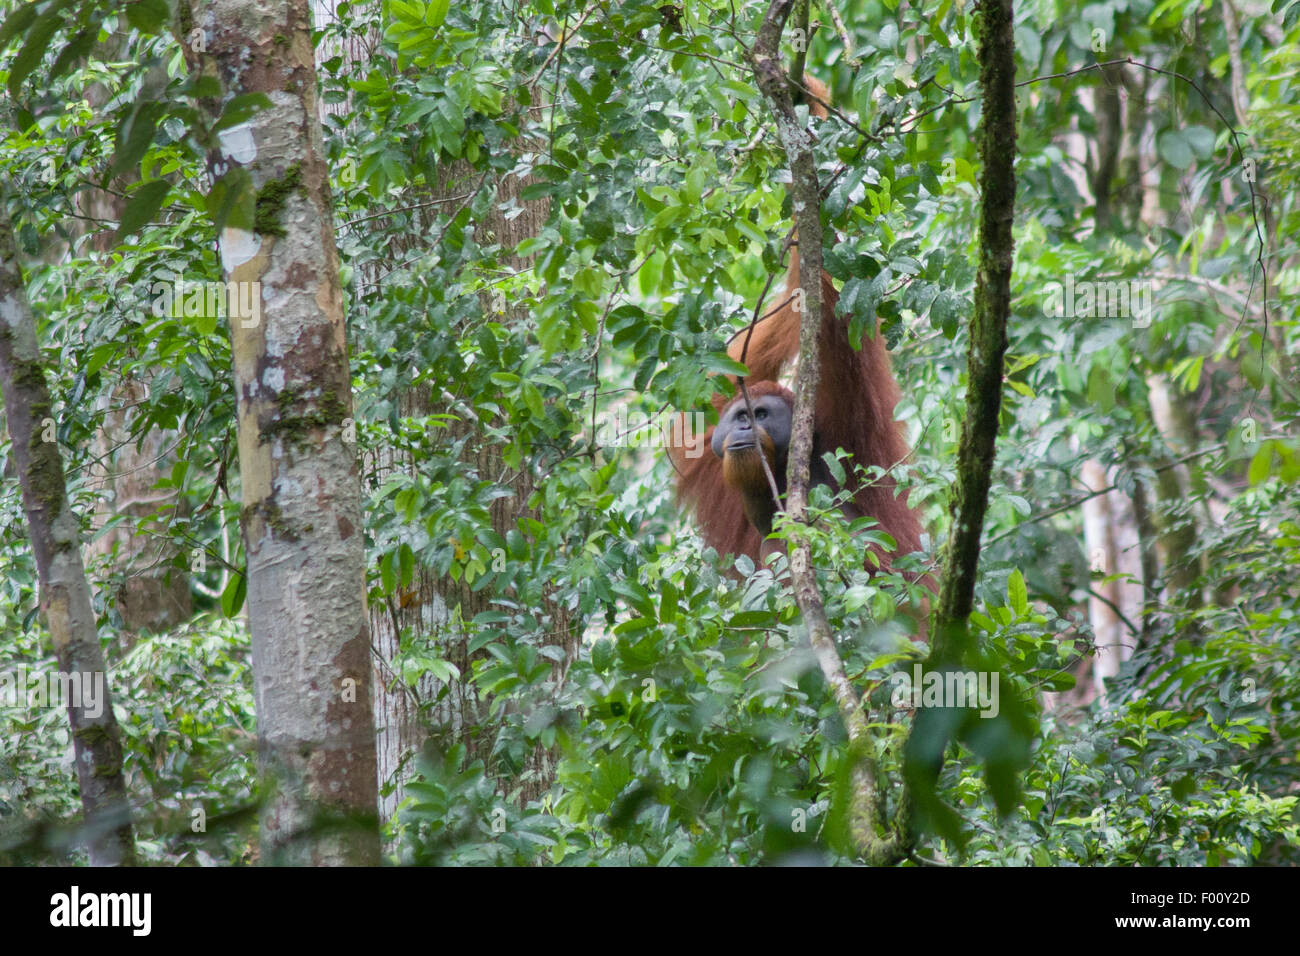 A wild male orangutan in Gunung Leuser National Park, Sumatra, Indonesia. Stock Photo